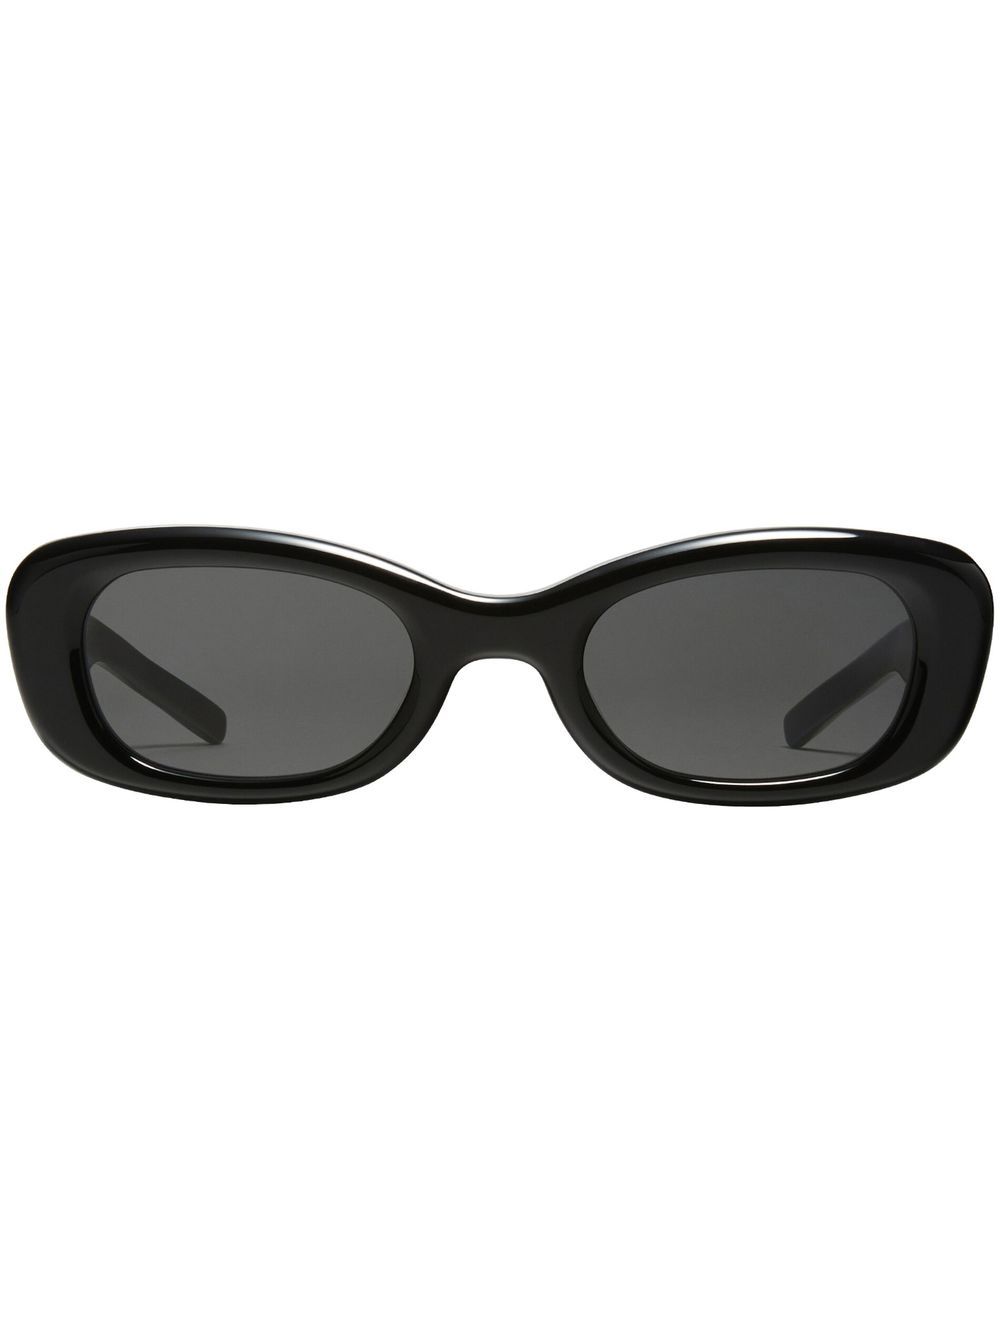 Sunglasses Gentle Monster Black in Metal - 32875039